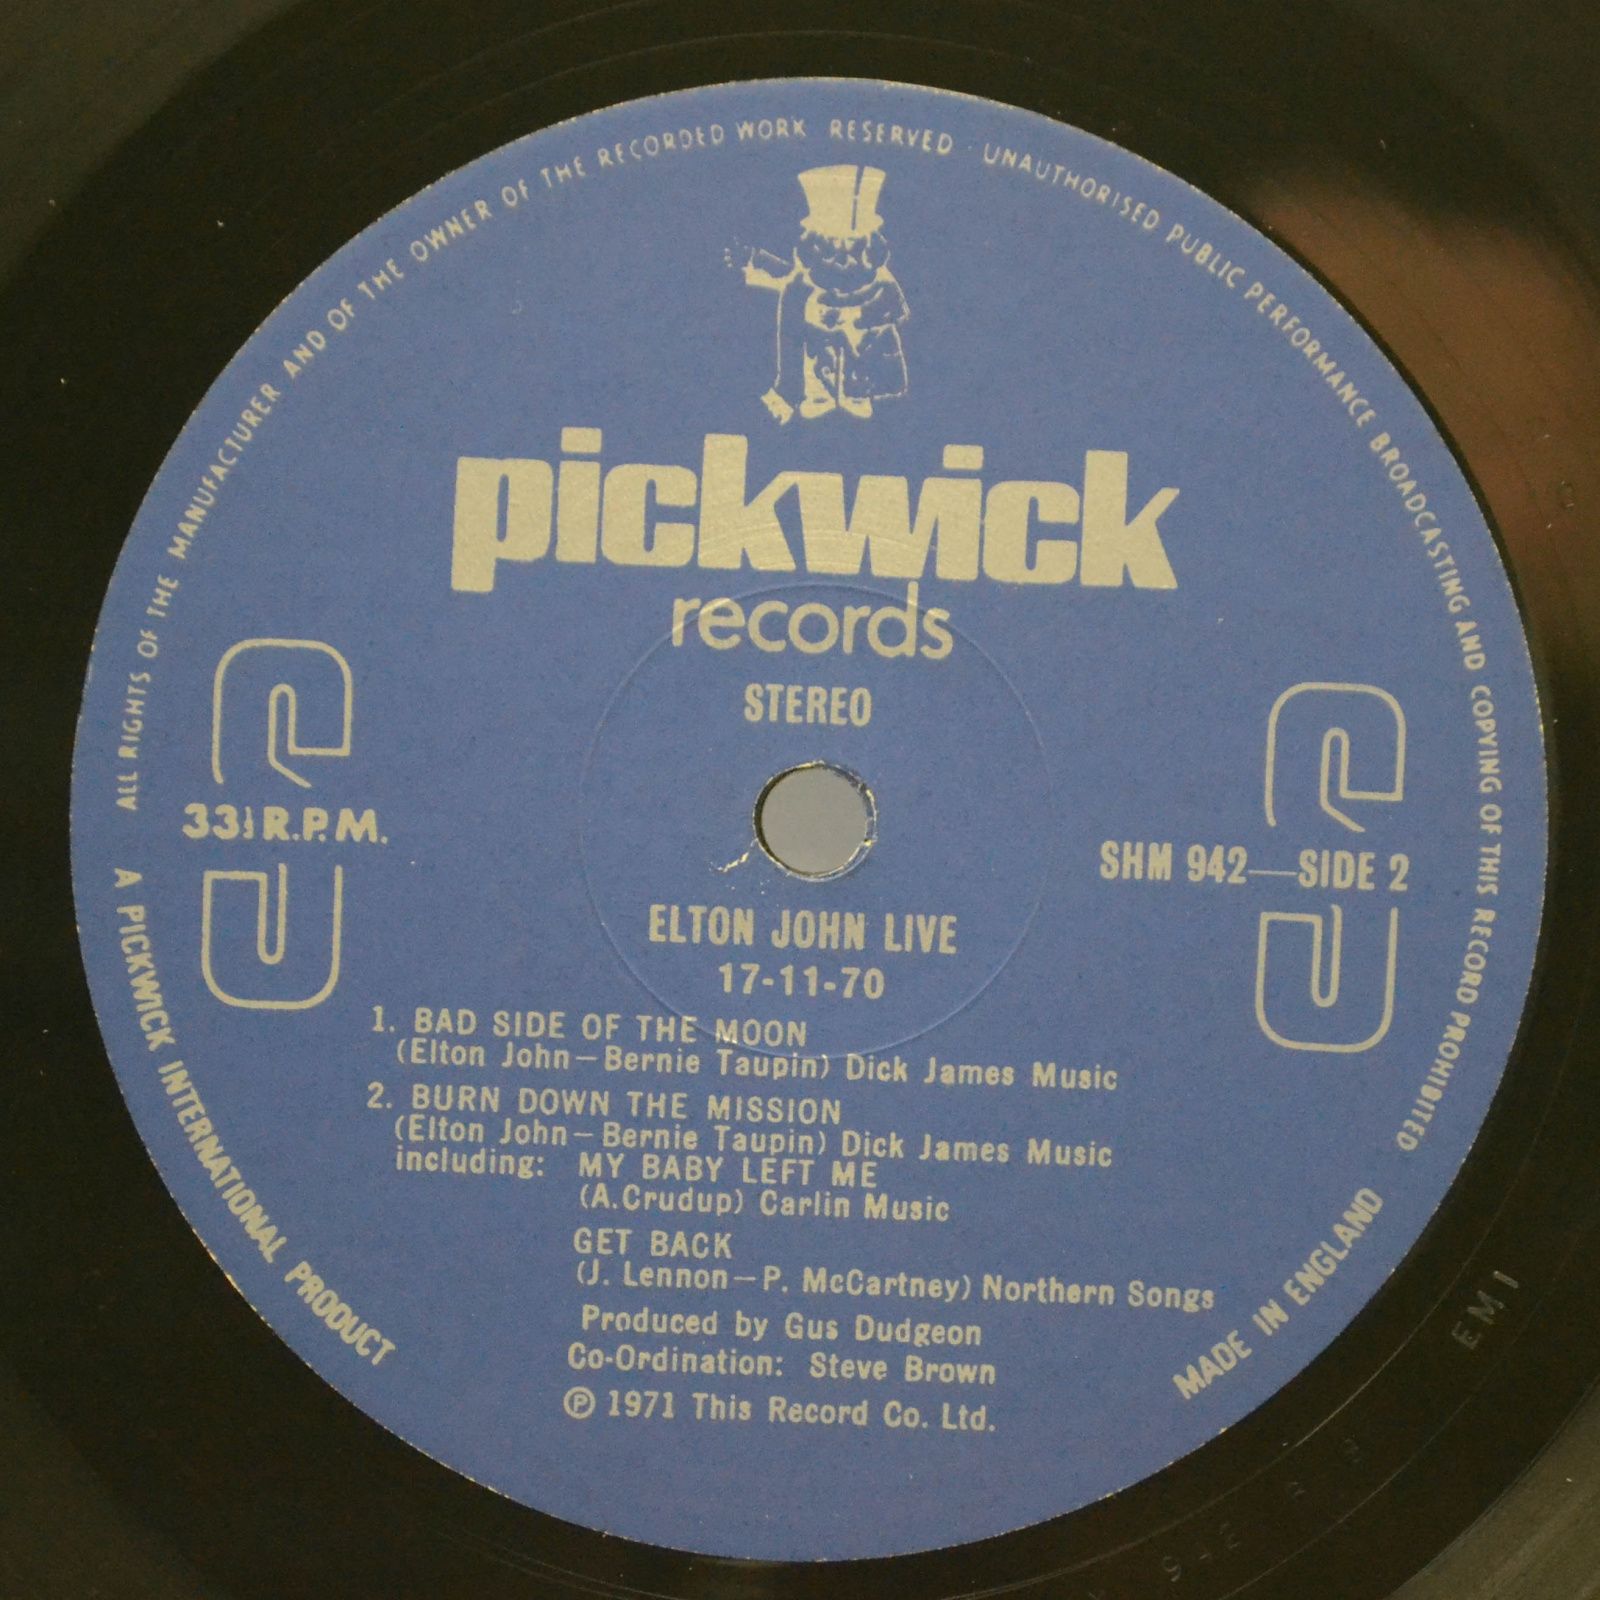 Nice / Elton John / Joe Cocker / Procol Harum — Pop History (Box-set, UK), 1980